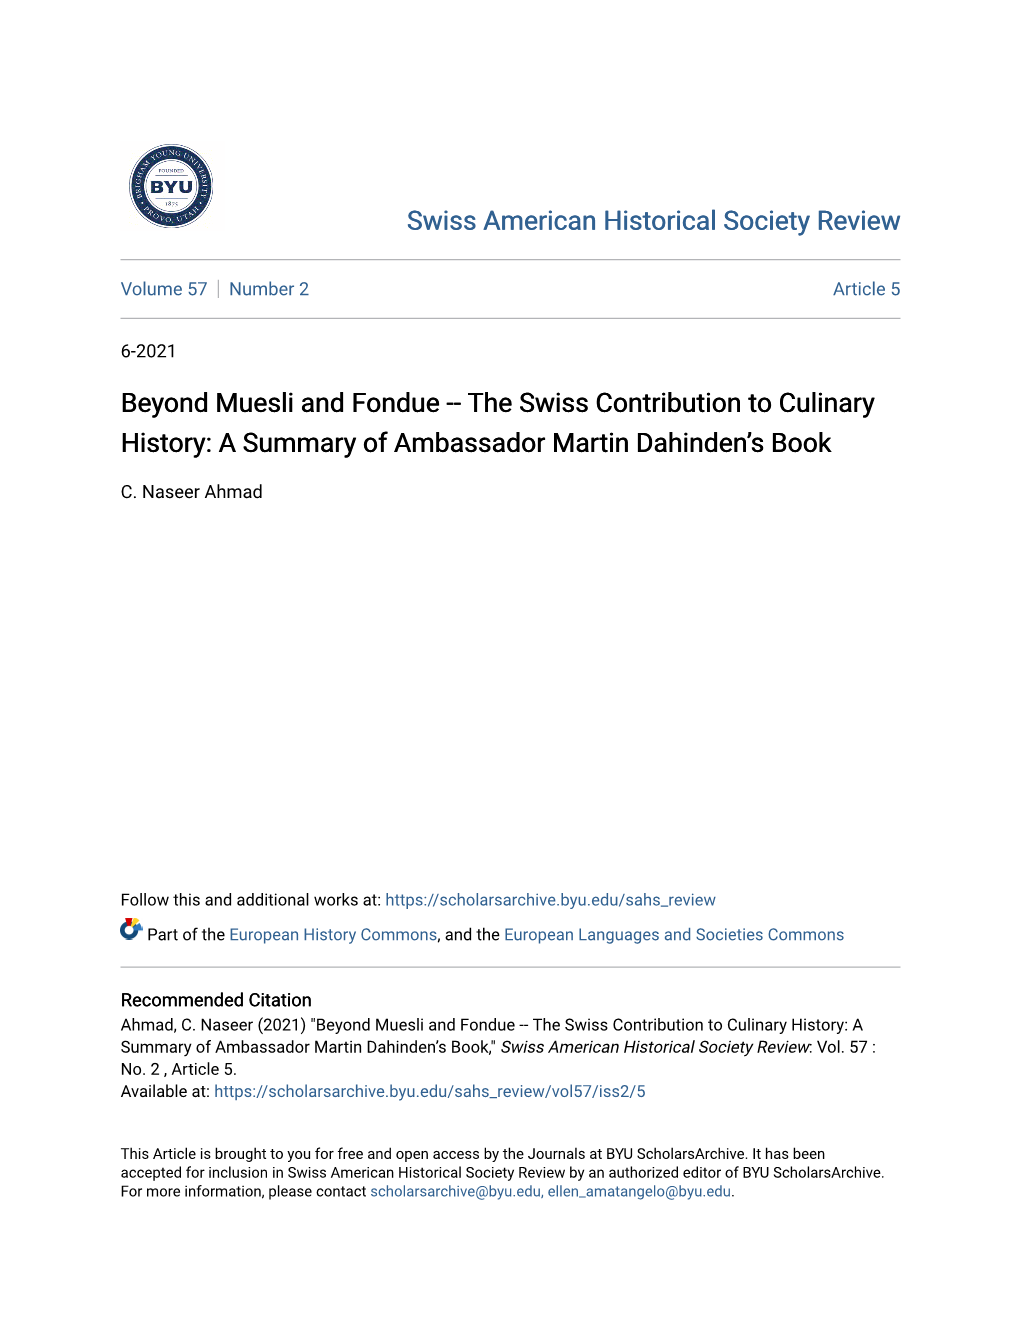 Beyond Muesli and Fondue -- the Swiss Contribution to Culinary History: a Summary of Ambassador Martin Dahinden’S Book